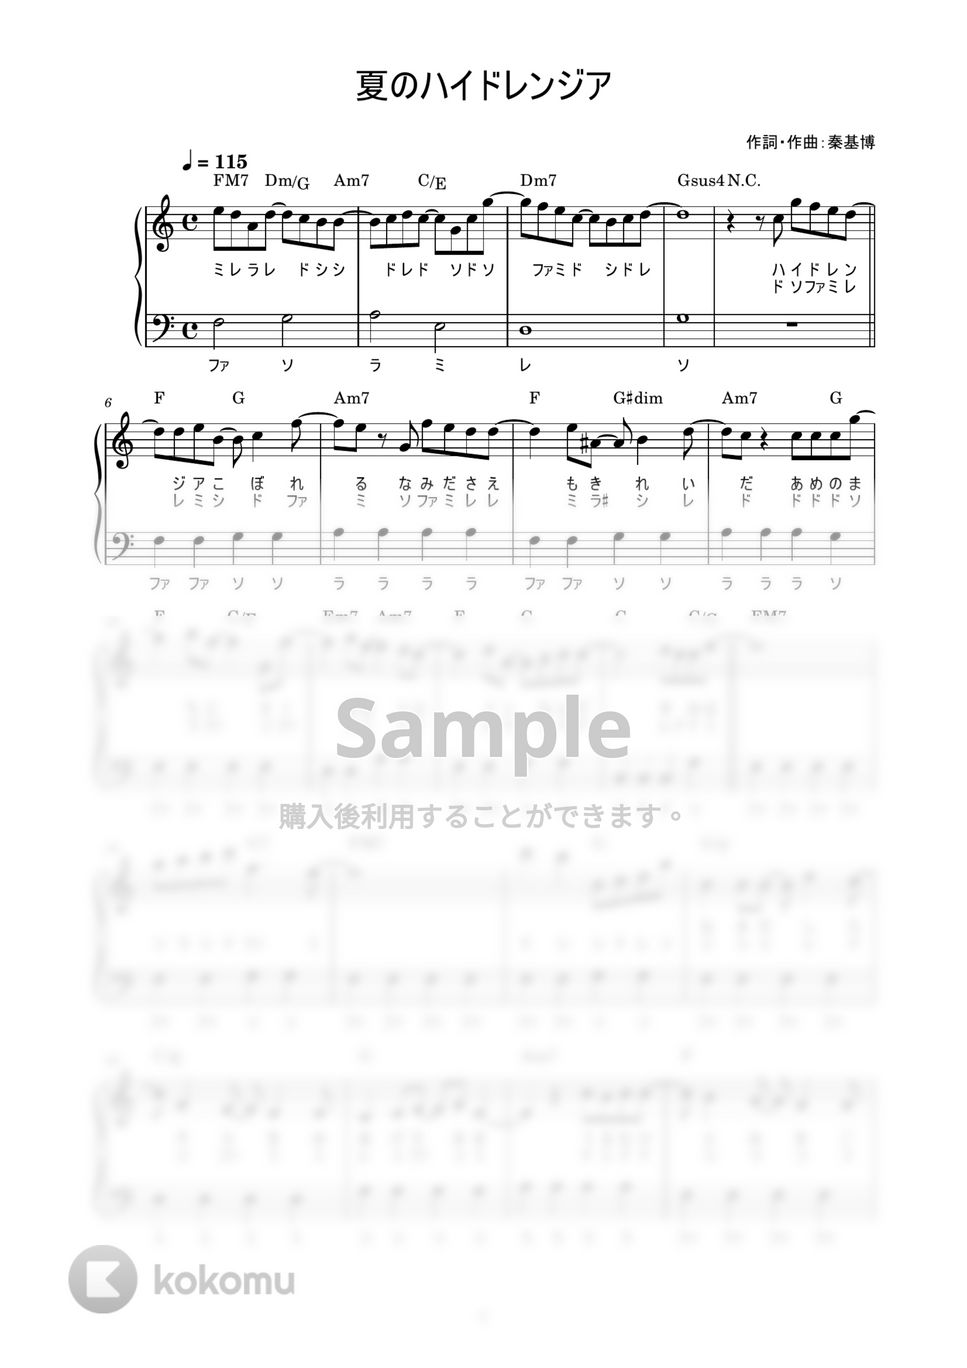 Sexy Zone - 夏のハイドレンジア (かんたん / 歌詞付き / ドレミ付き / 初心者) by piano.tokyo